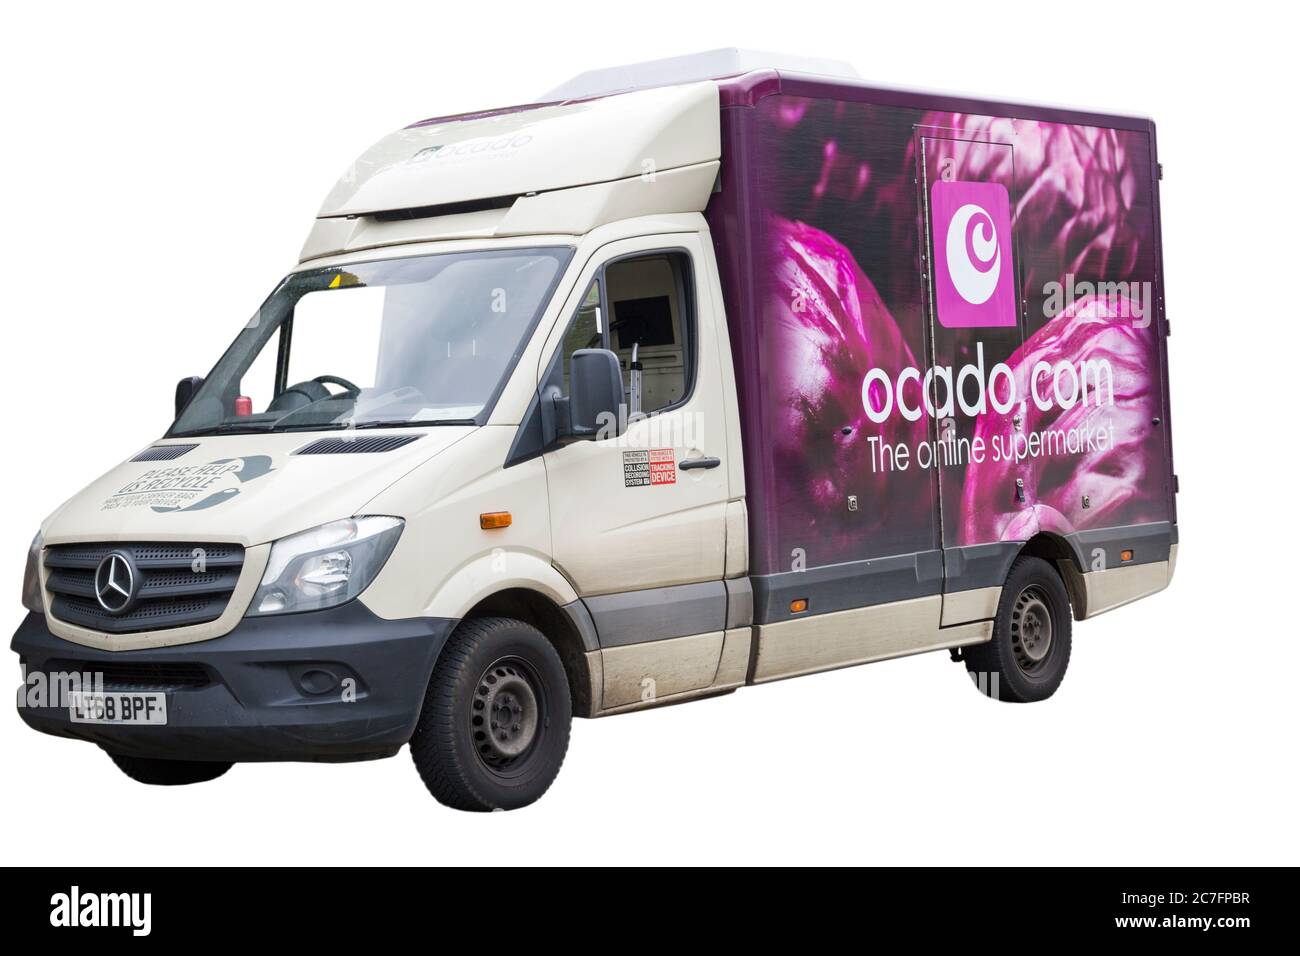 Ocado van, Ocado delivery van, Ocado lorry, Ocado truck cut out isolated on white background Stock Photo